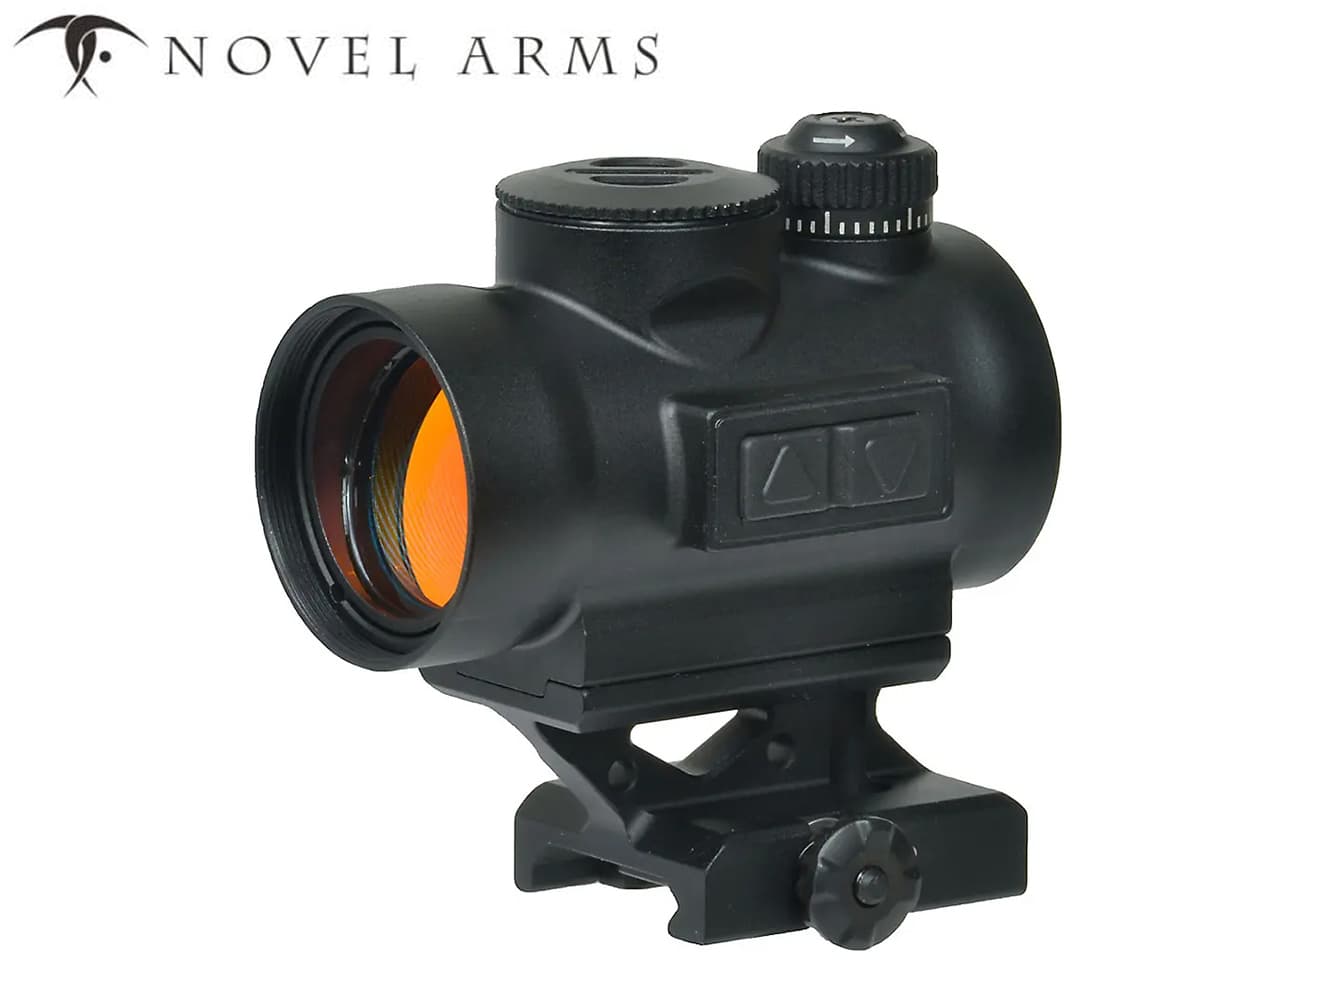 NA-DS-007 NOVEL ARMS SURE HIT MRS2 ミニリフレックスサイト for 20mm